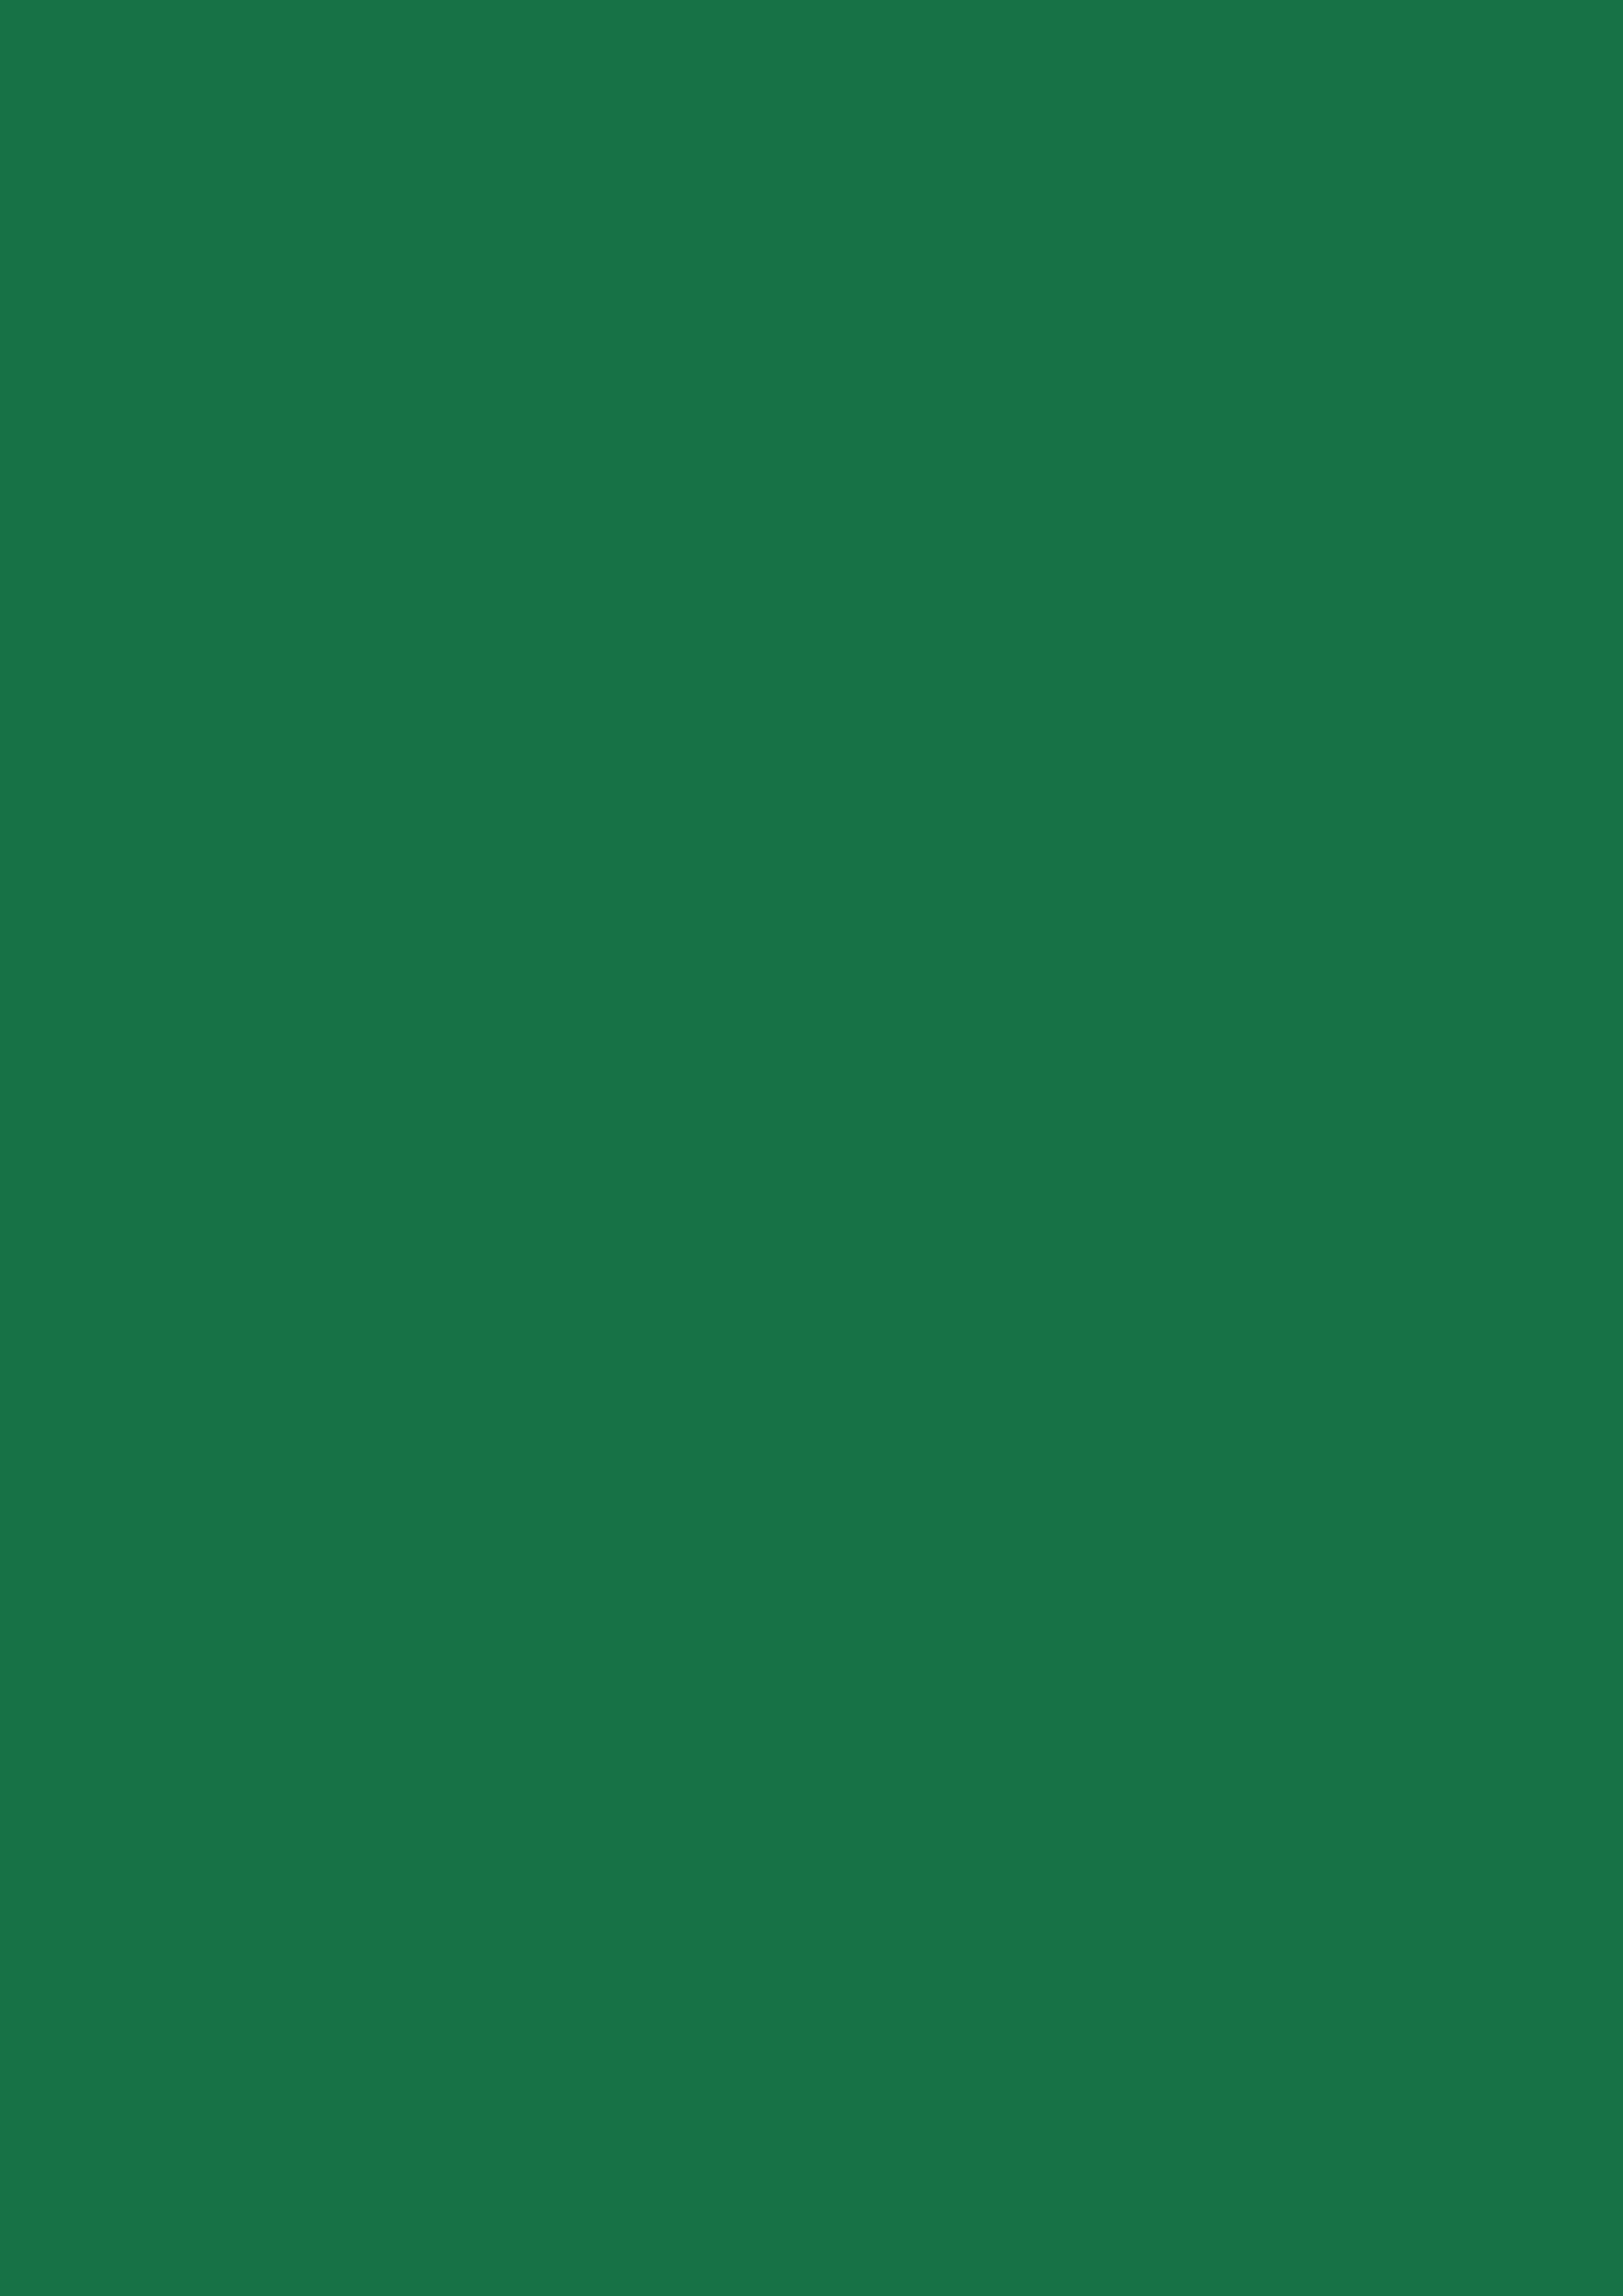 2480x3508 Dark Spring Green Solid Color Background